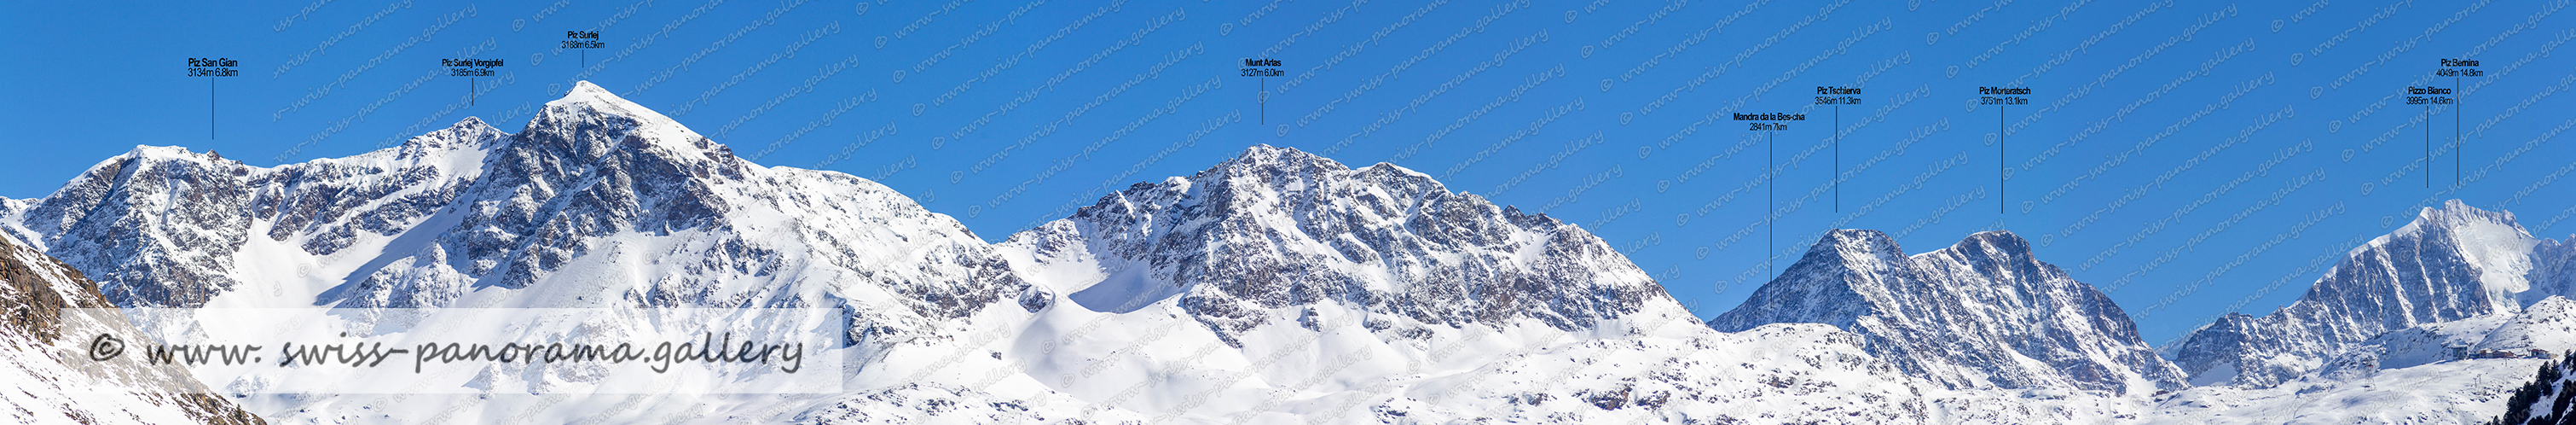 Panorama Panorama Julierpass Blick auf Piz Tschierva, Piz Morteratsch und Piz Bernina